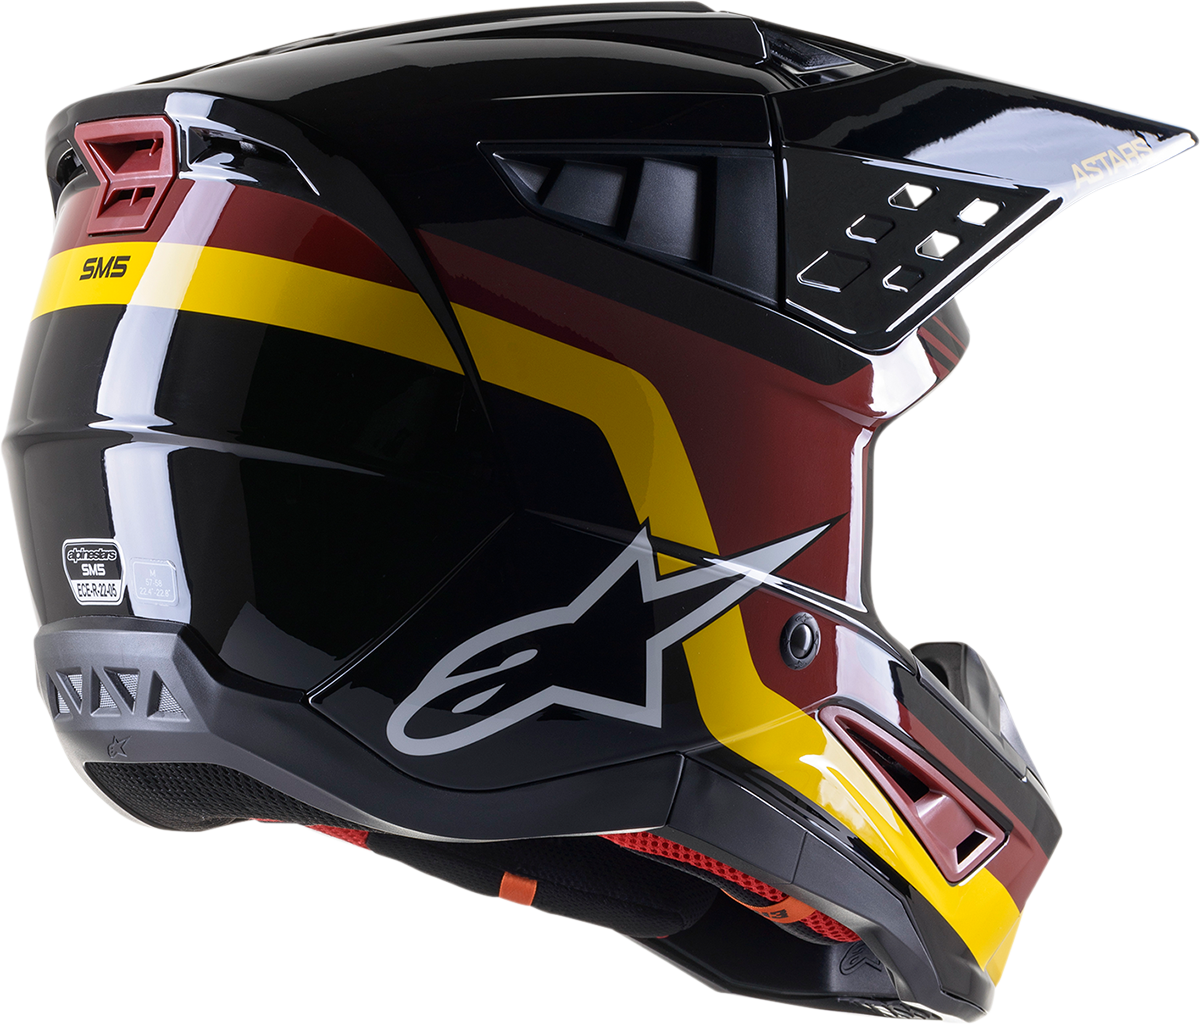 ALPINESTARS SM5 Helmet - Venture - Black/Bordeaux/Yellow/Glossy - 2XL 8305122-1358-2X